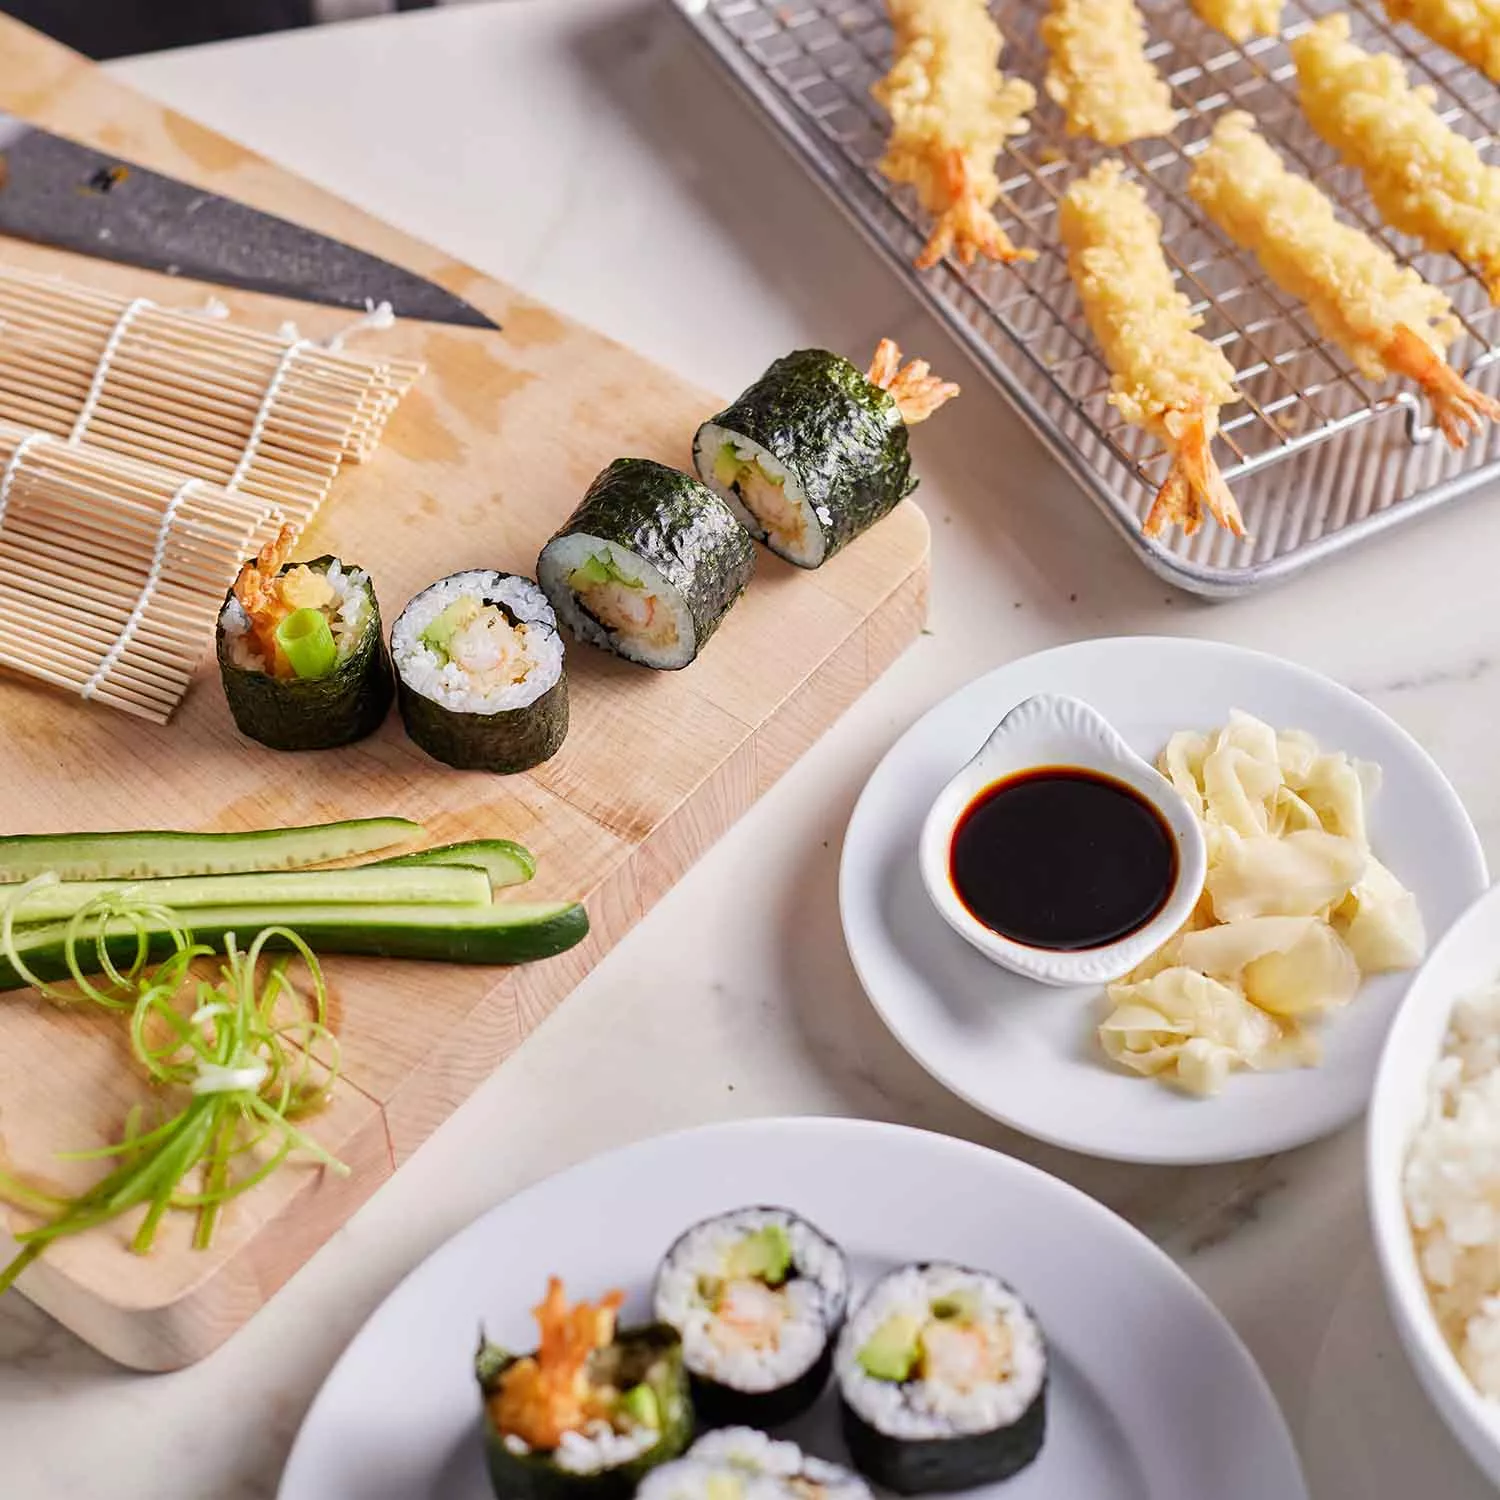 Sushi Master Ultimate Sushi Maker Kit Rice Roll Molds Kitchen +